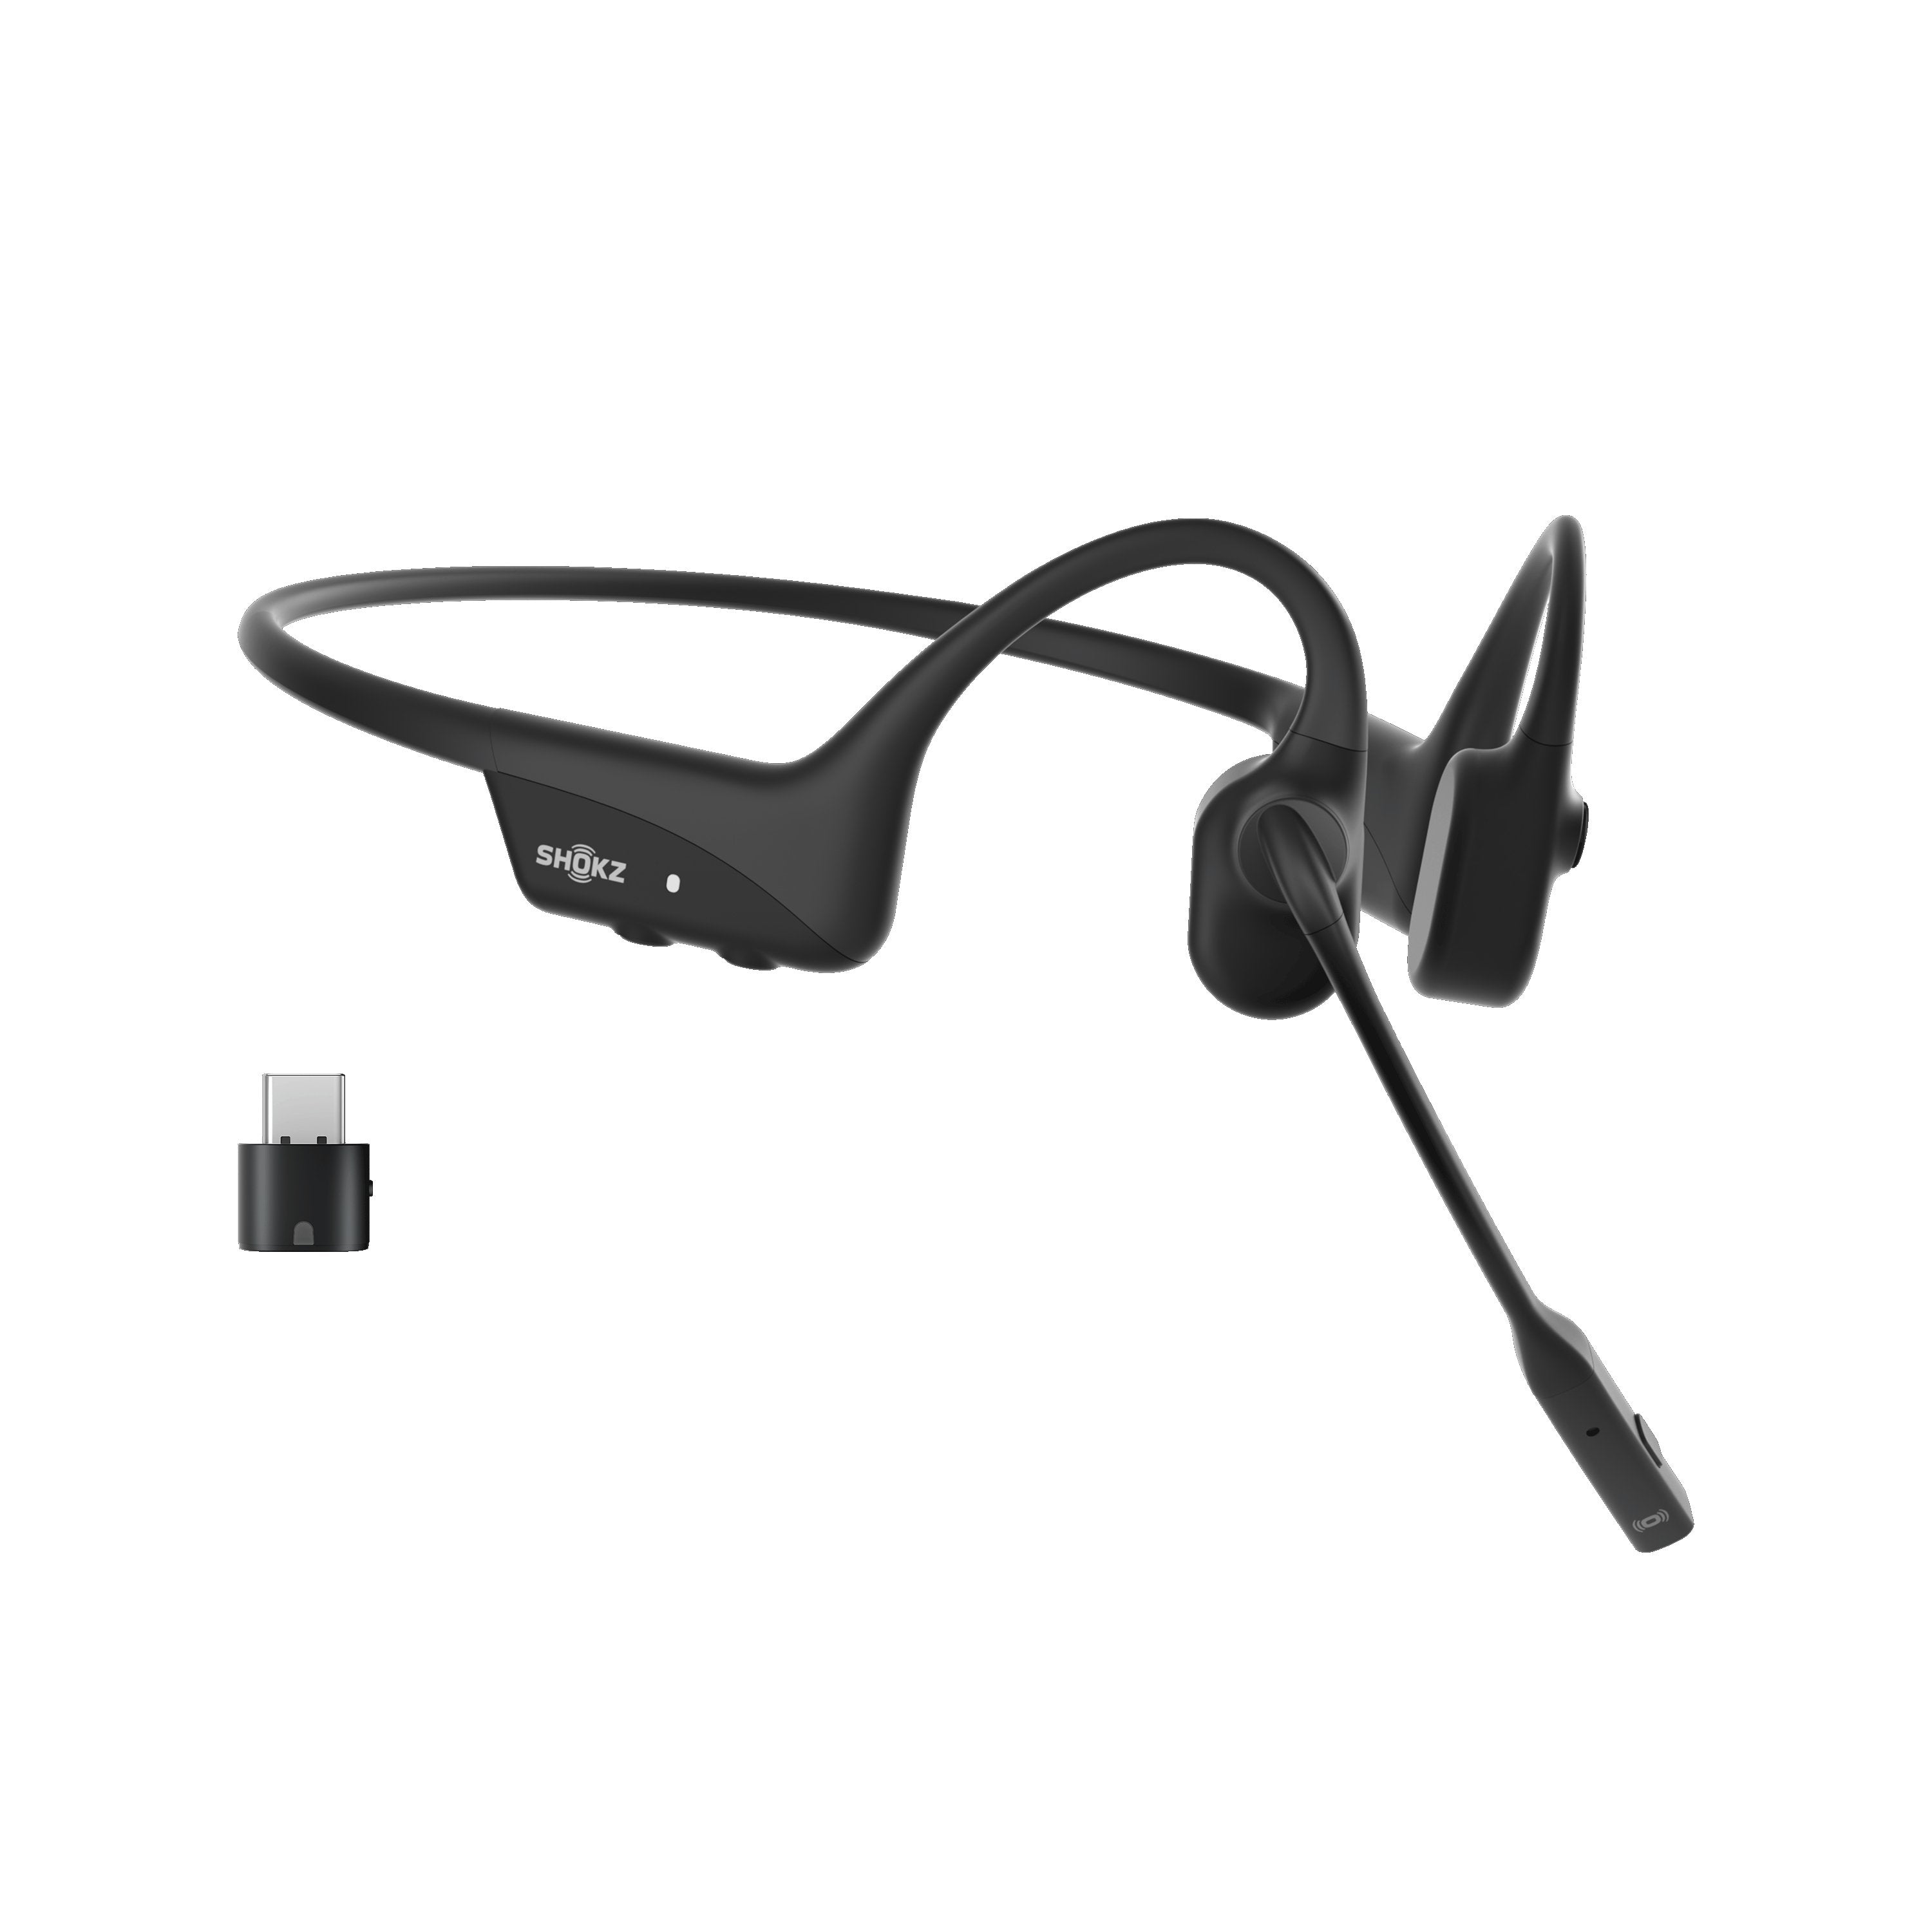 Shokz Opencomm2 UC Stereo Bone Conduction Bluetooth Headset - Headset Advisor